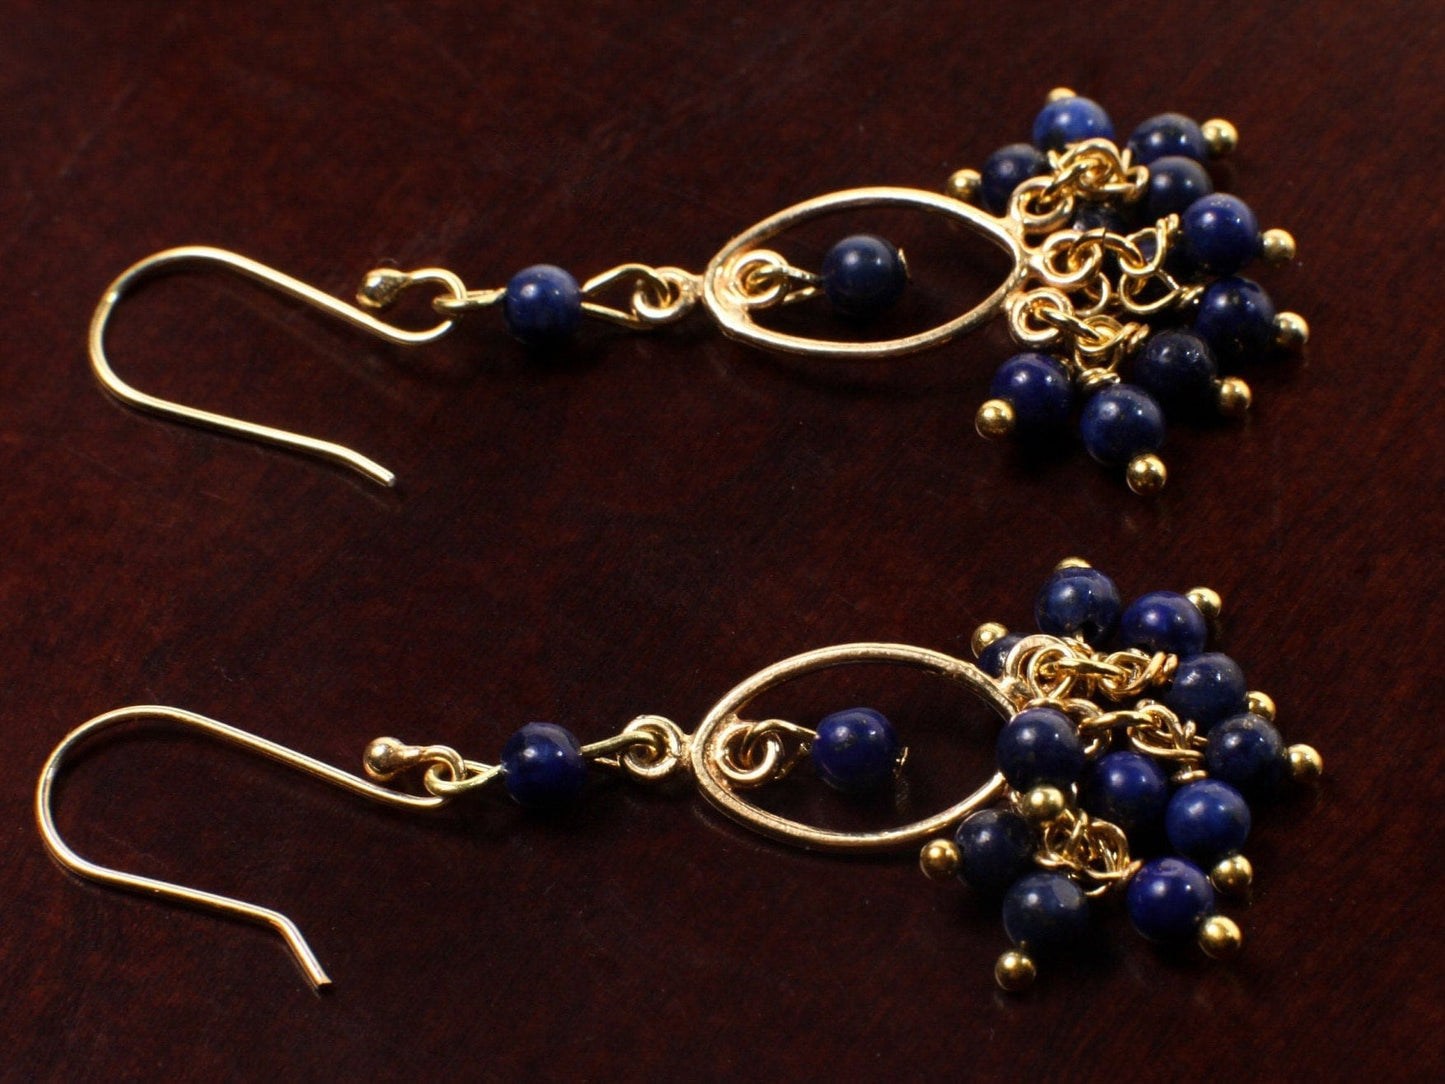 Genuine Lapis Lazuli Wire Wrapped Dangling Gold Vermeil,Gold Over 925 Sterling Silver Chandelier & Ear Wire, Blue Gemstone earrings